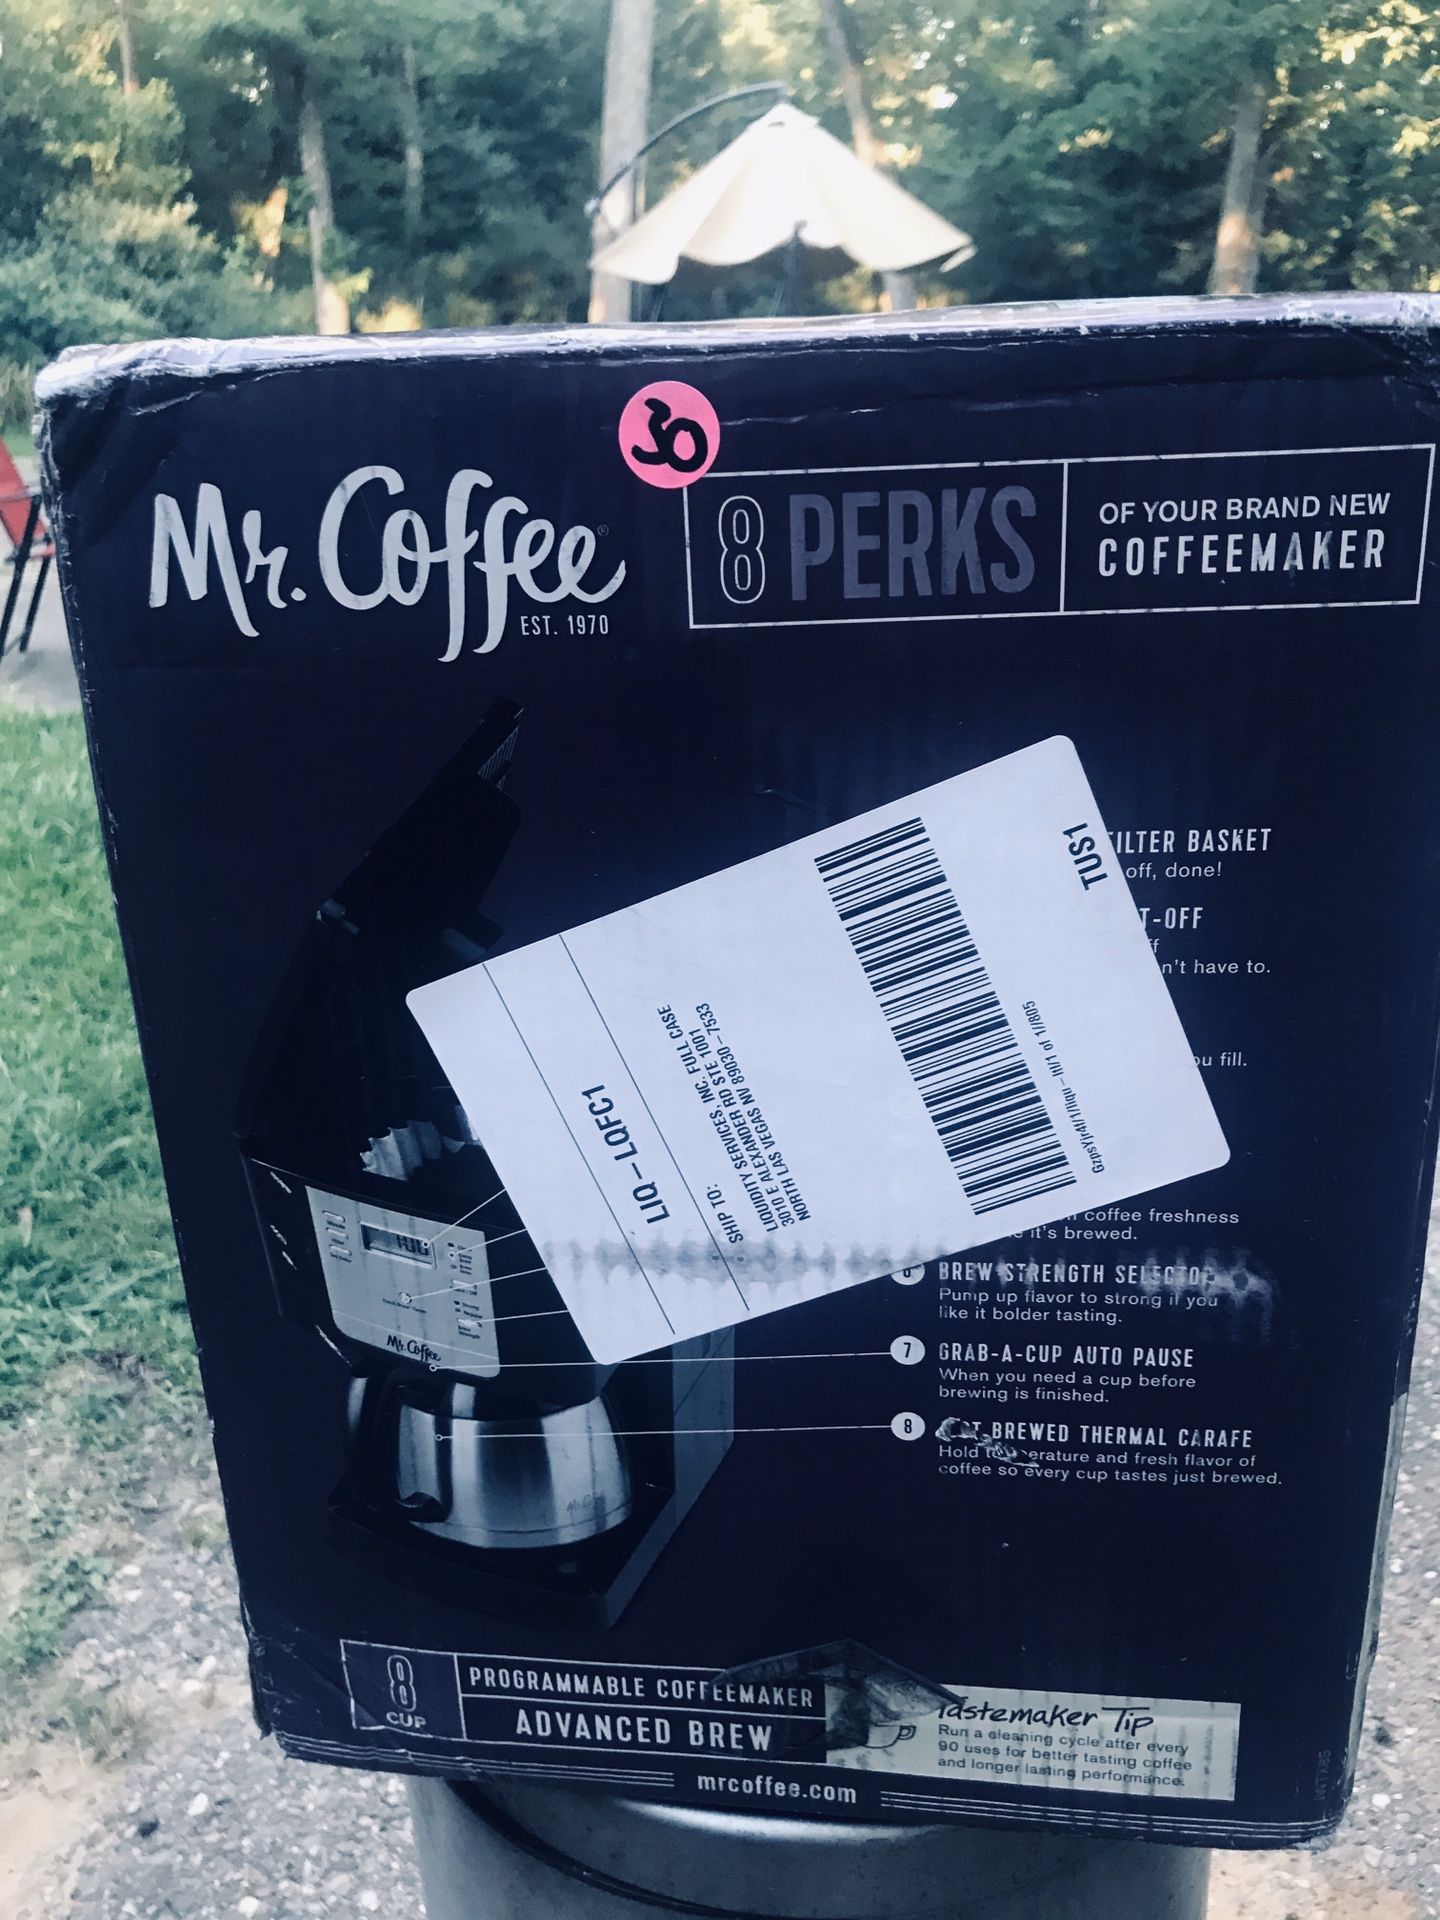 Coffee maker/ MR. COFFEE